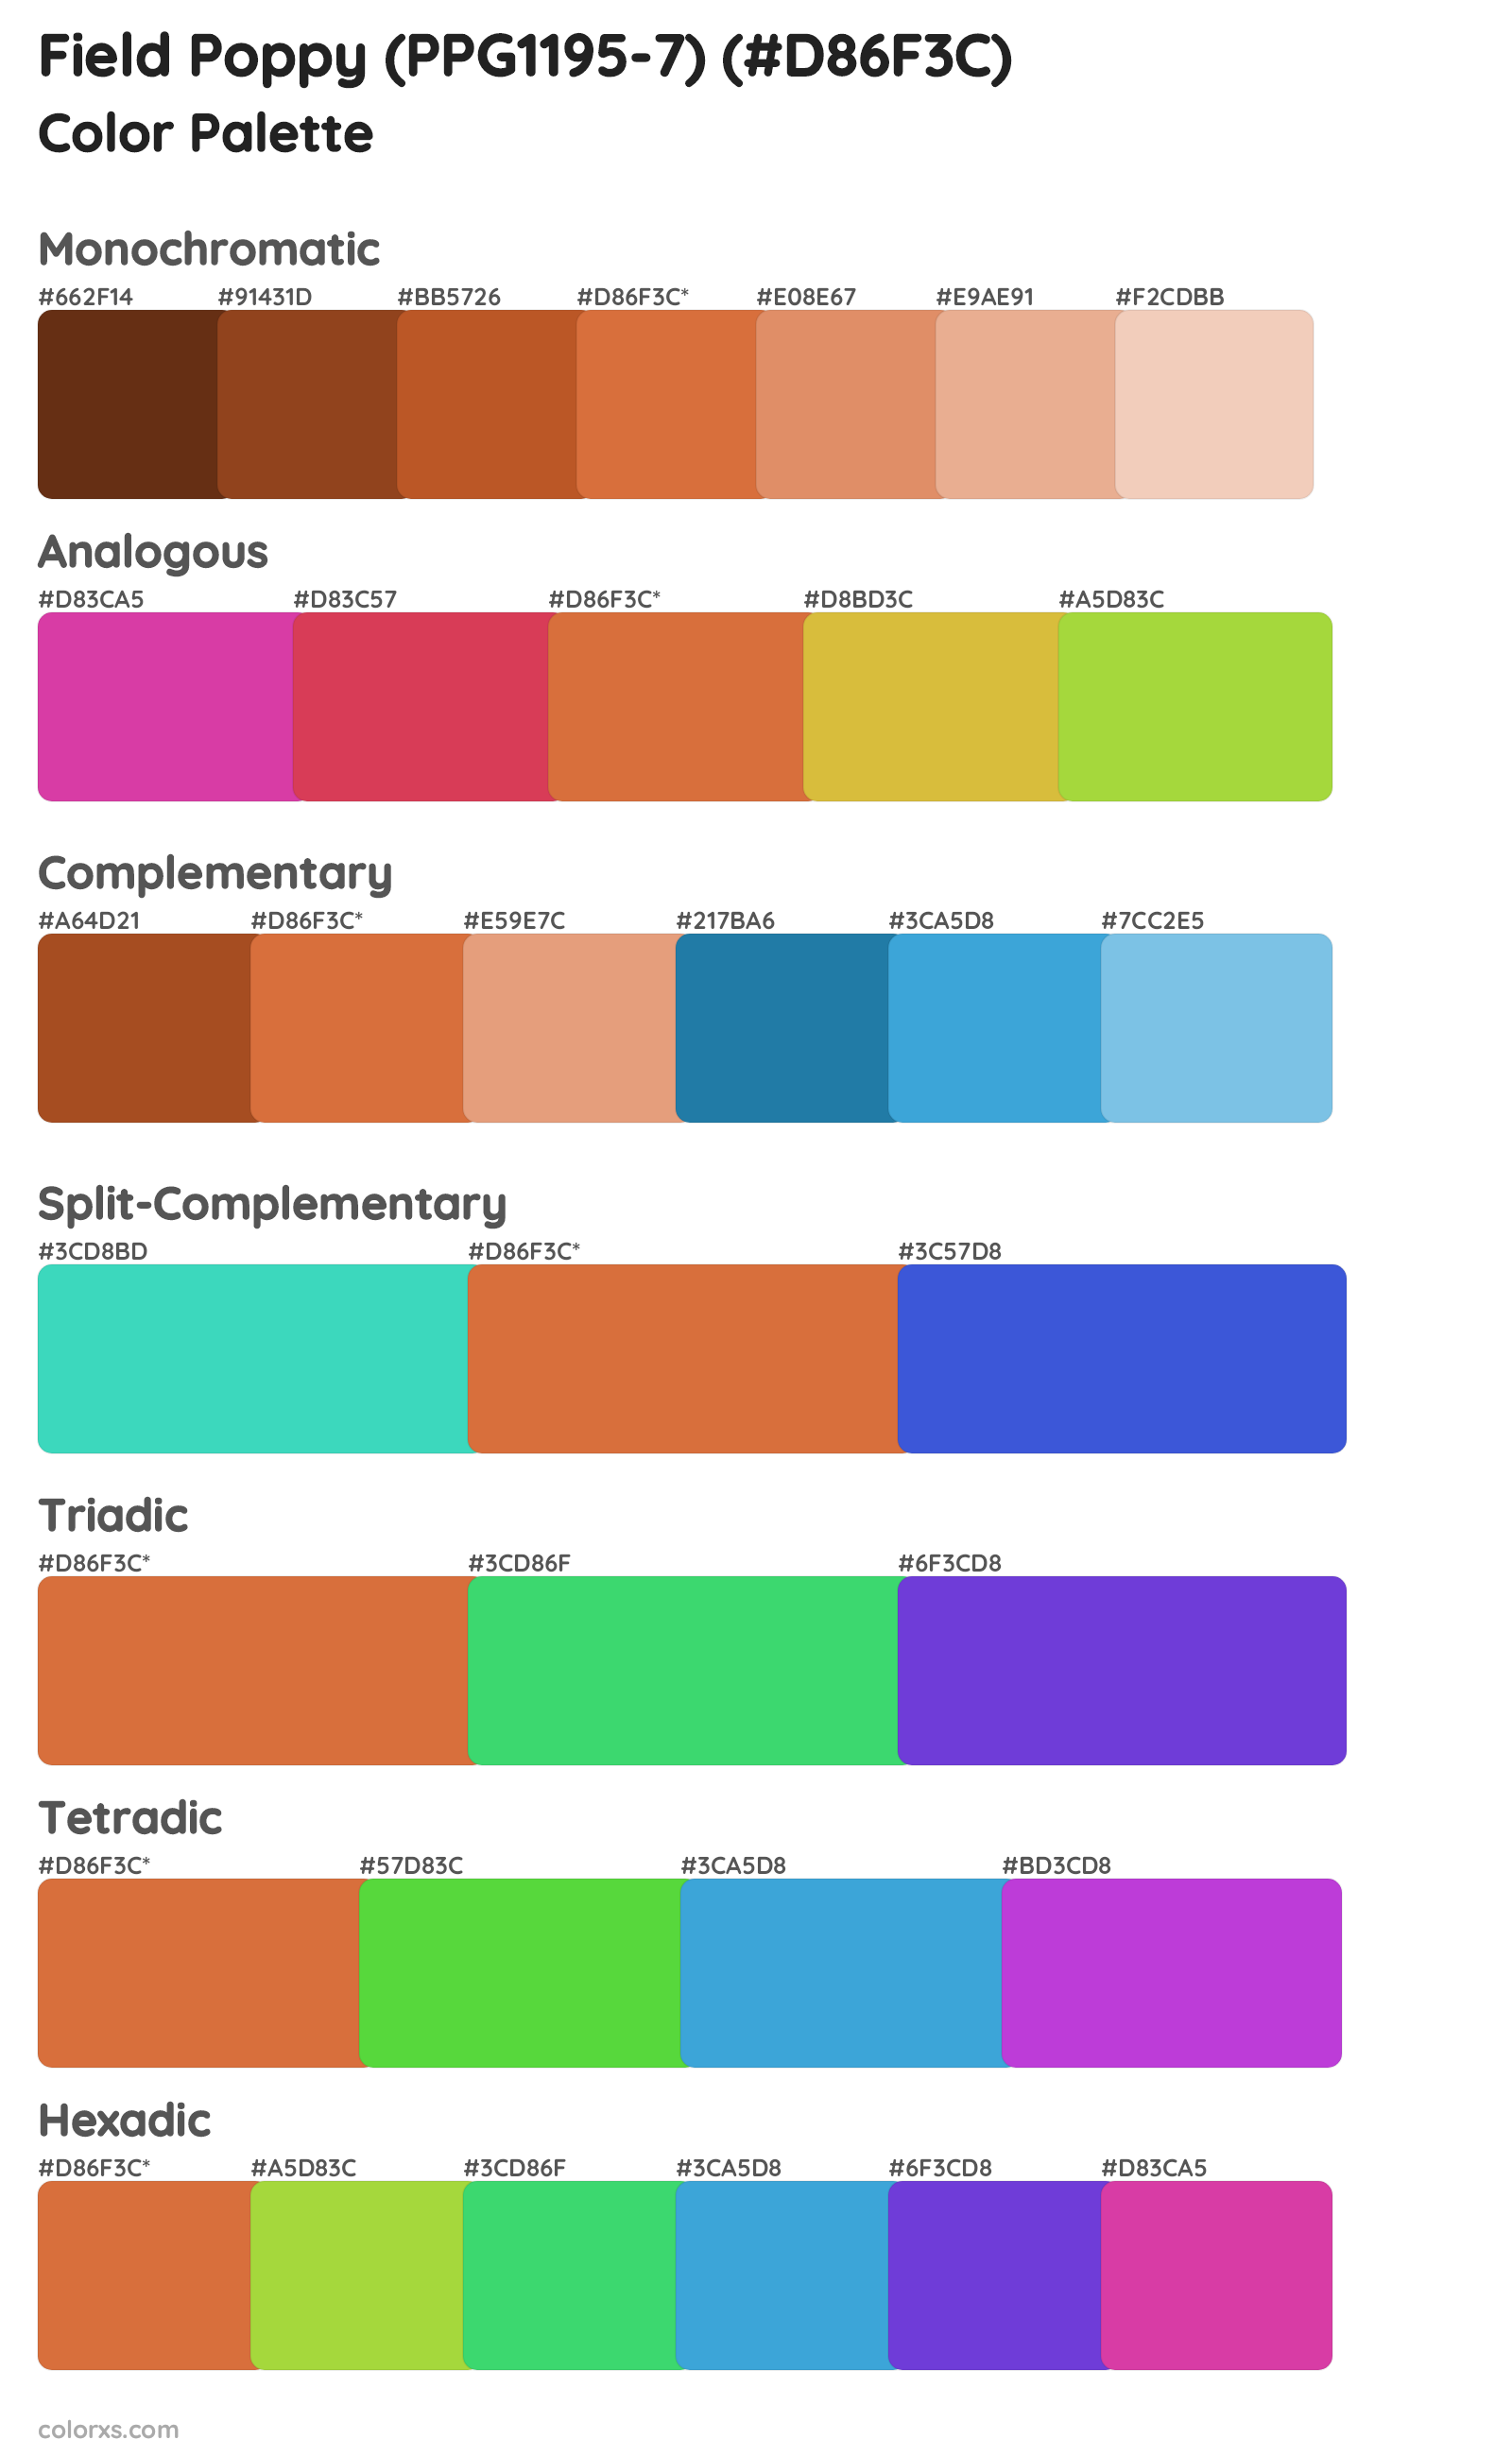 Field Poppy (PPG1195-7) Color Scheme Palettes